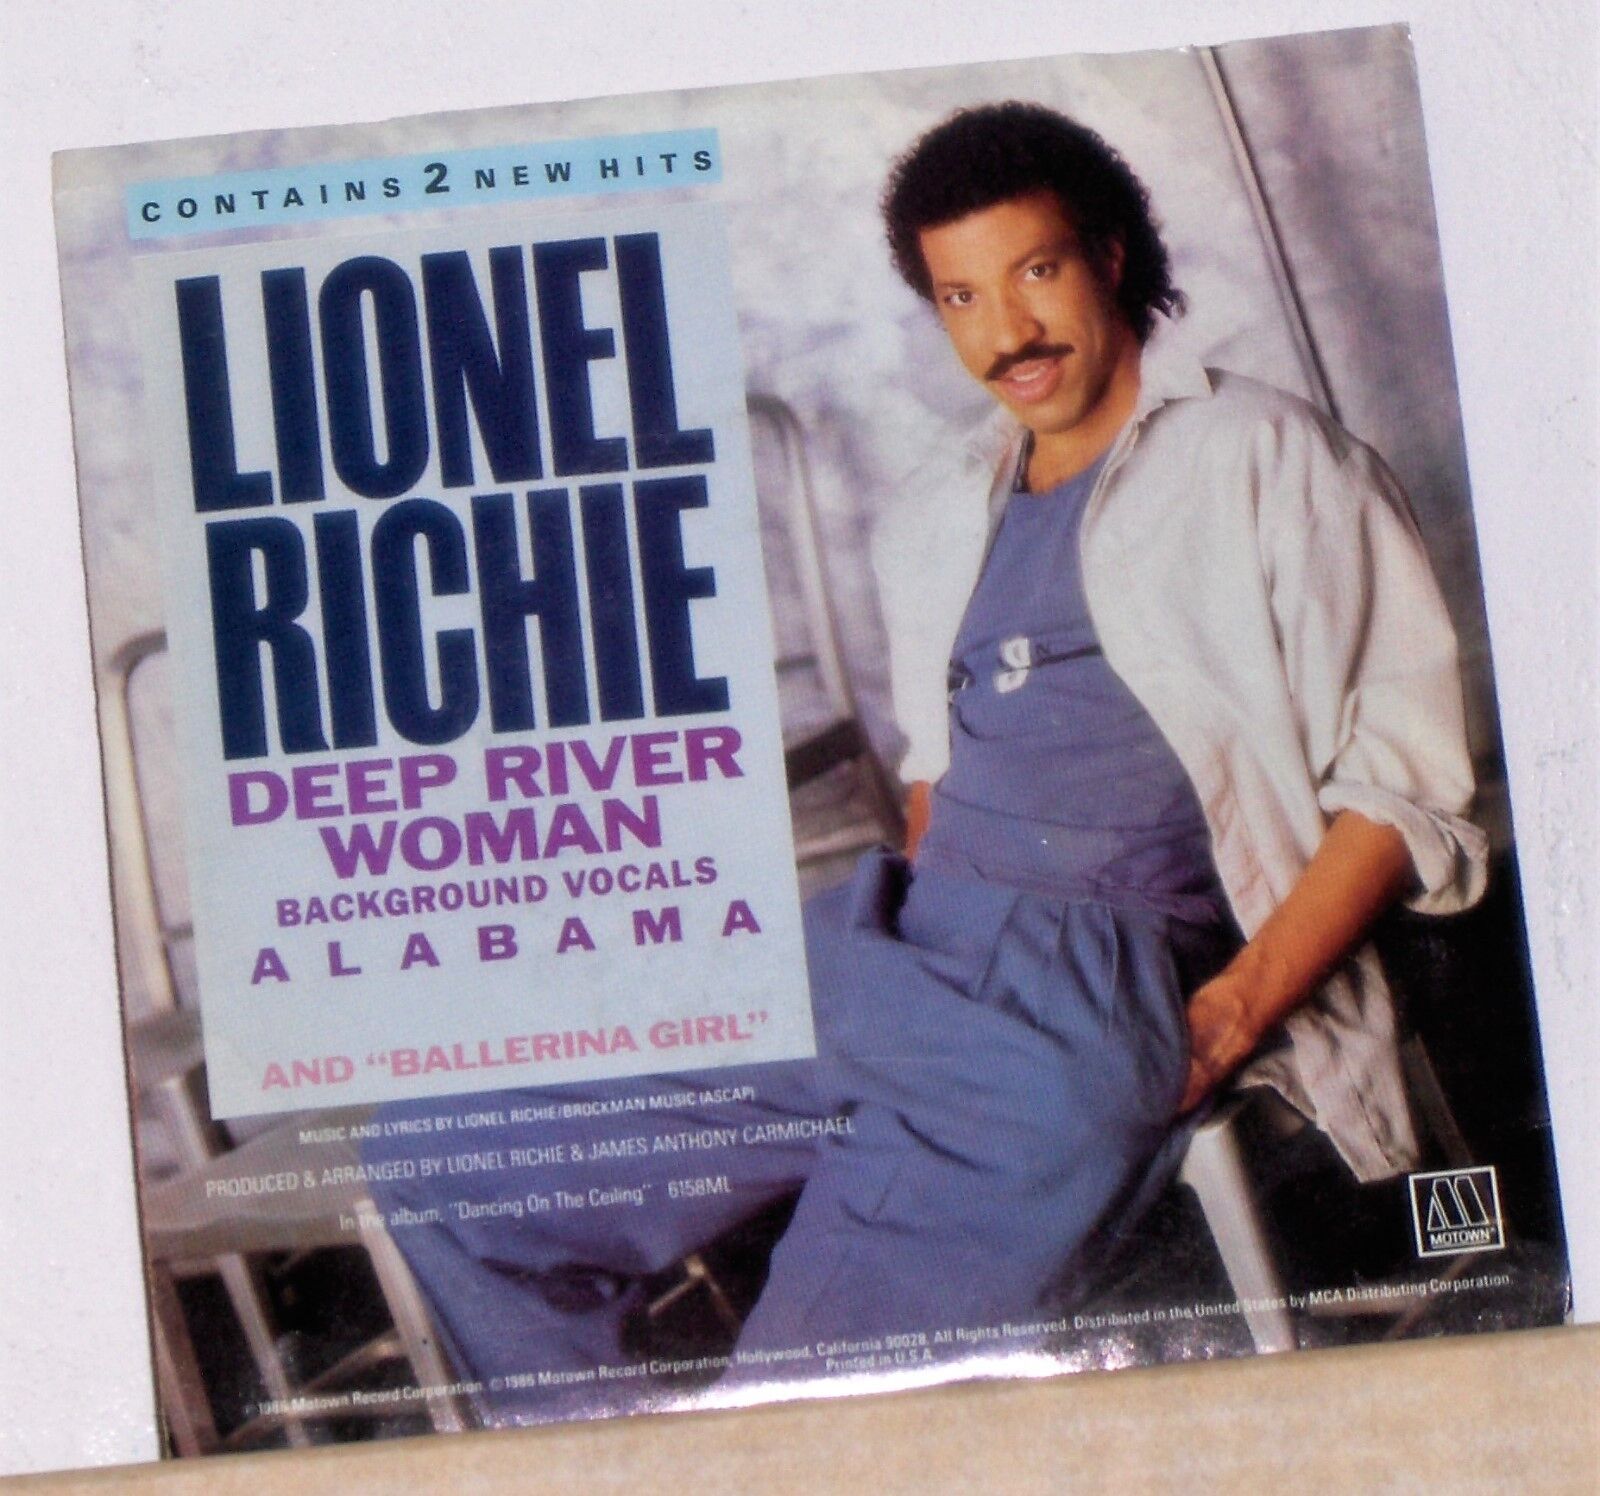 Lionel Richie - Ballerina Girl / Deep River Woman - Near Mint 45 Record Single